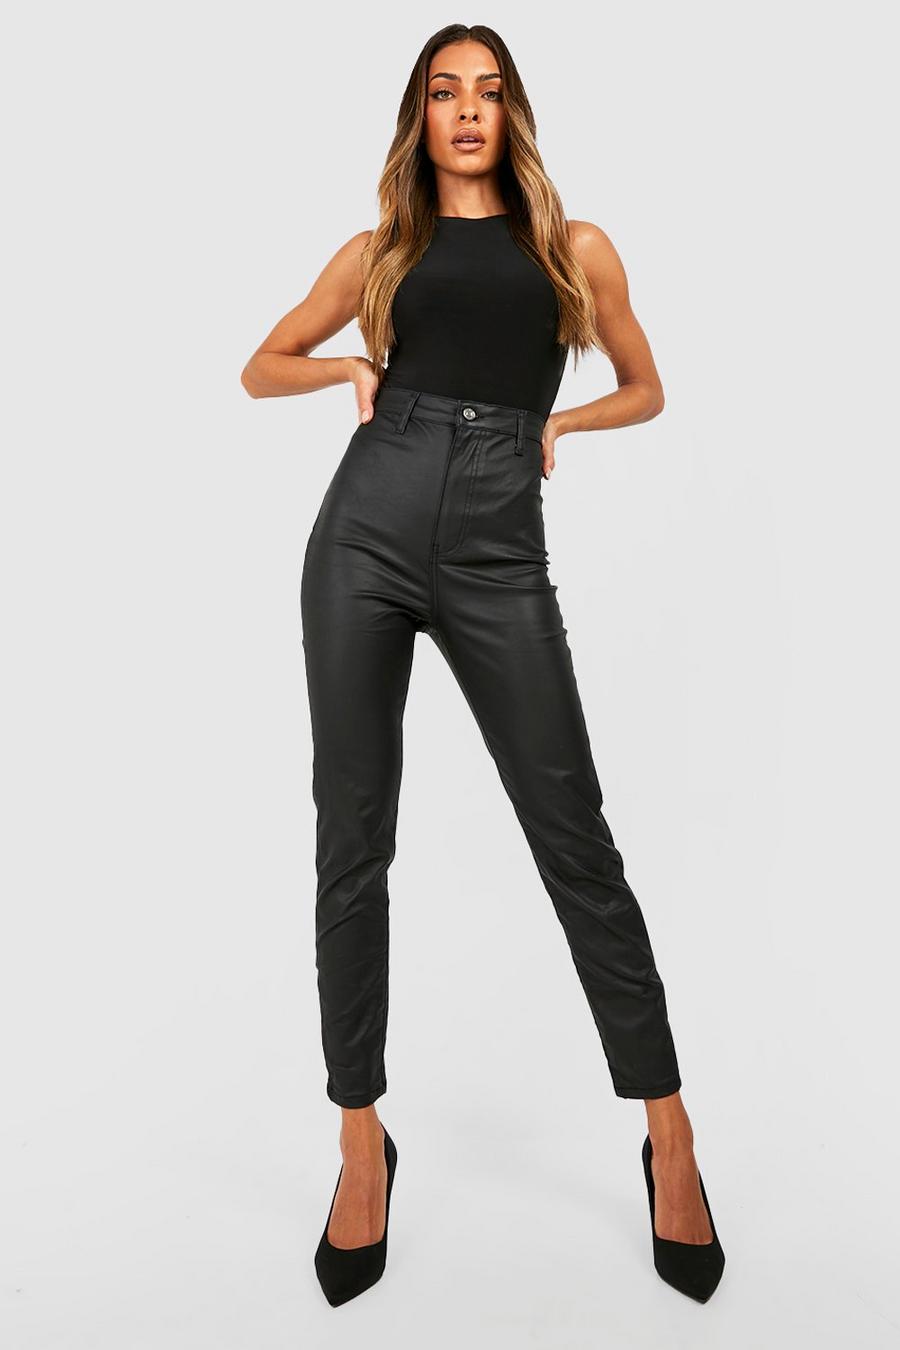 https://media.boohoo.com/i/boohoo/gzz26794_black_xl/female-black-coated-high-waisted-disco-skinny-jeans/?w=900&qlt=default&fmt.jp2.qlt=70&fmt=auto&sm=fit